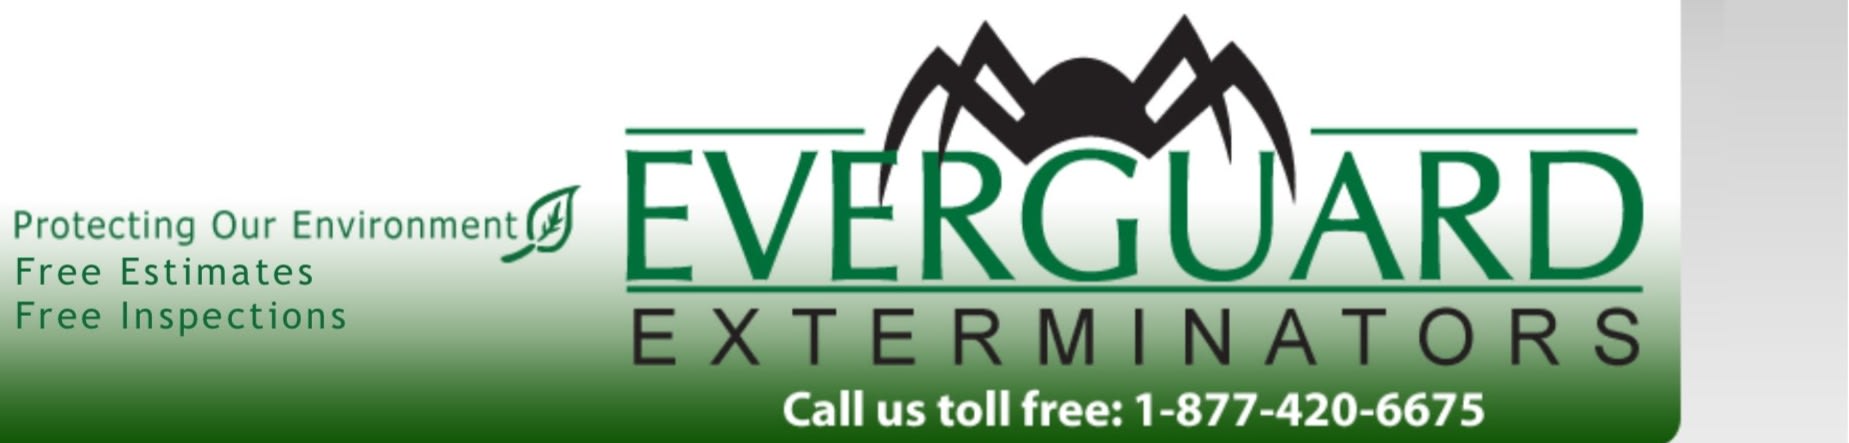 Everguard Exterminators